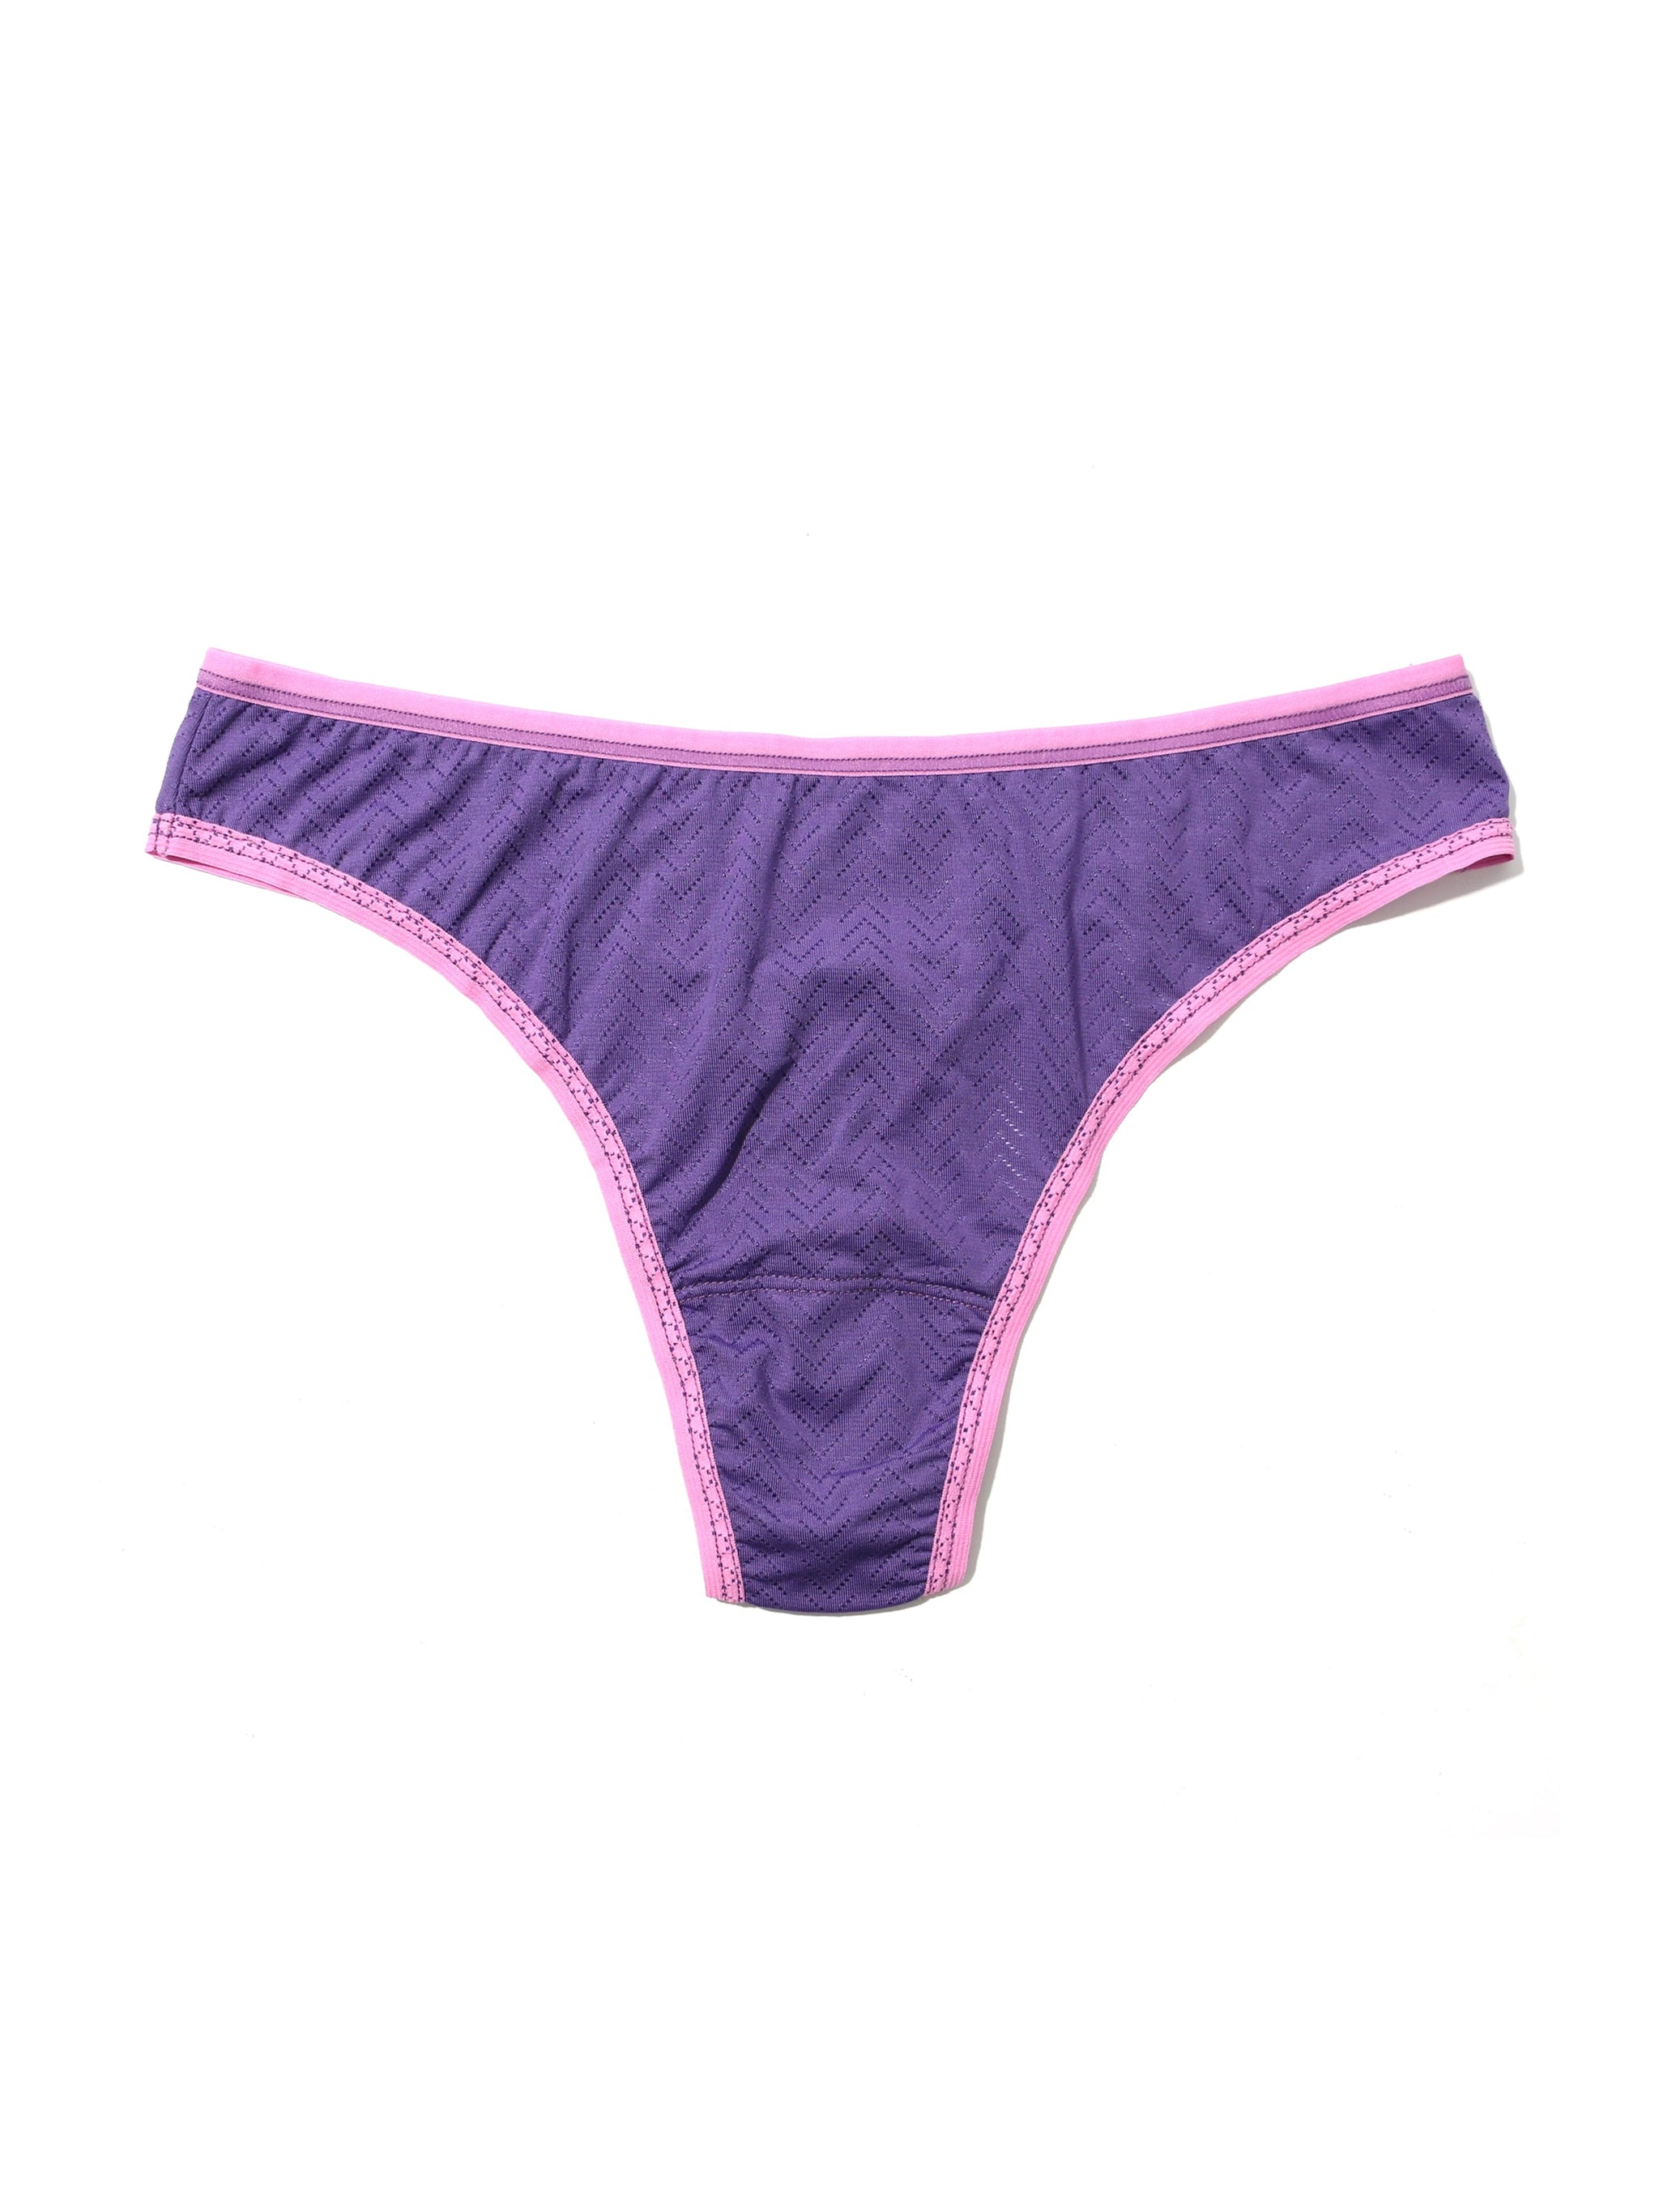 Pink Thongs - Lace & Cotton